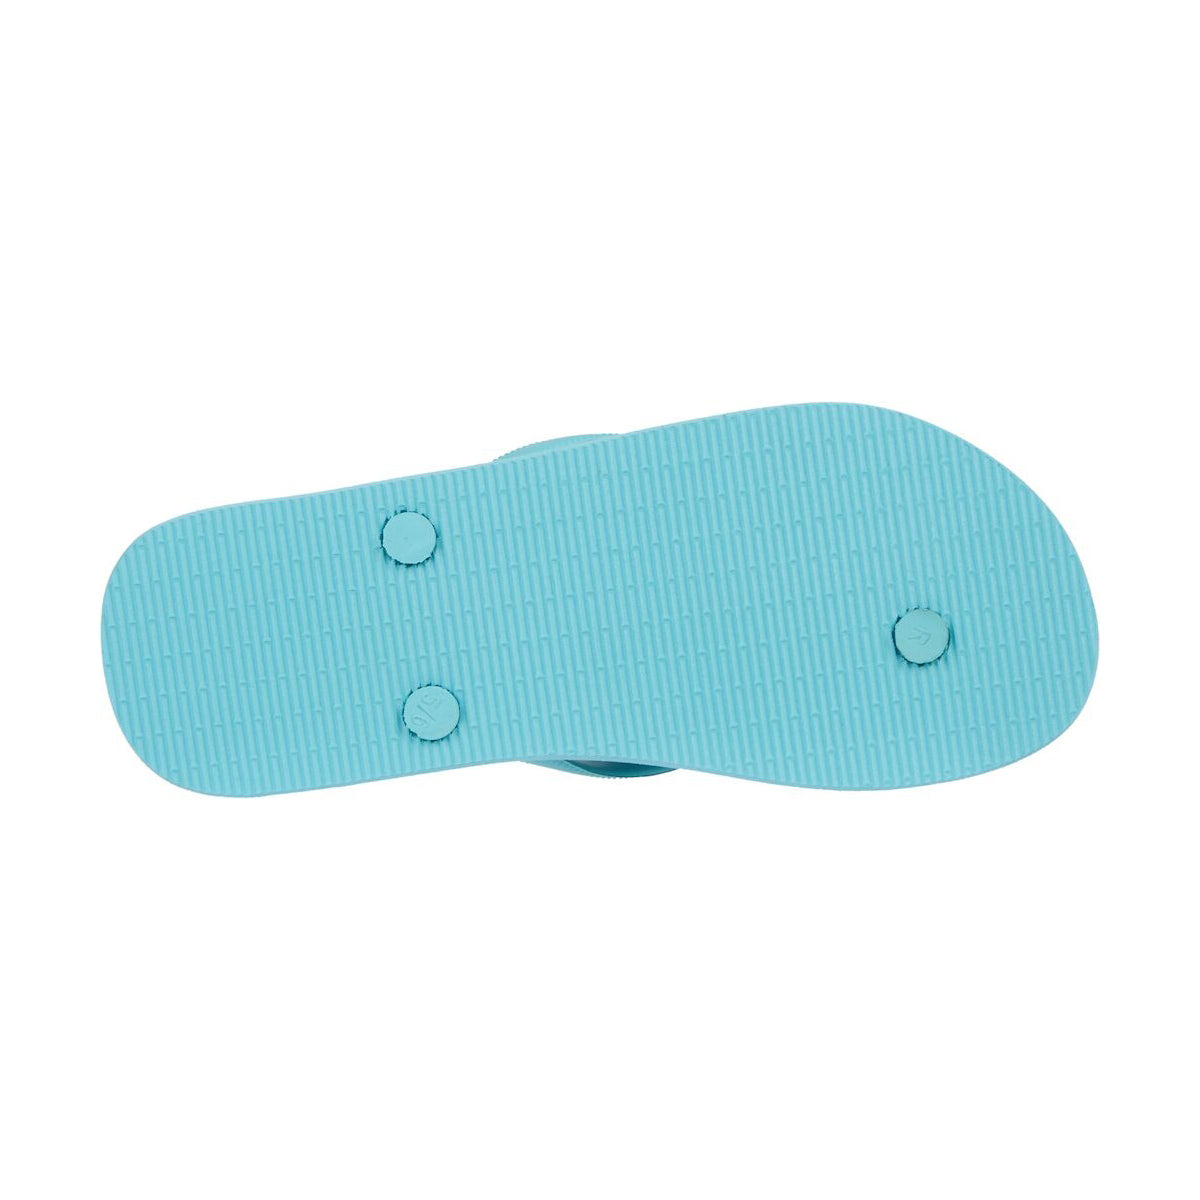 Firefly Waianae 3 Flip-Flops For Women, Beach Design, Turquoise